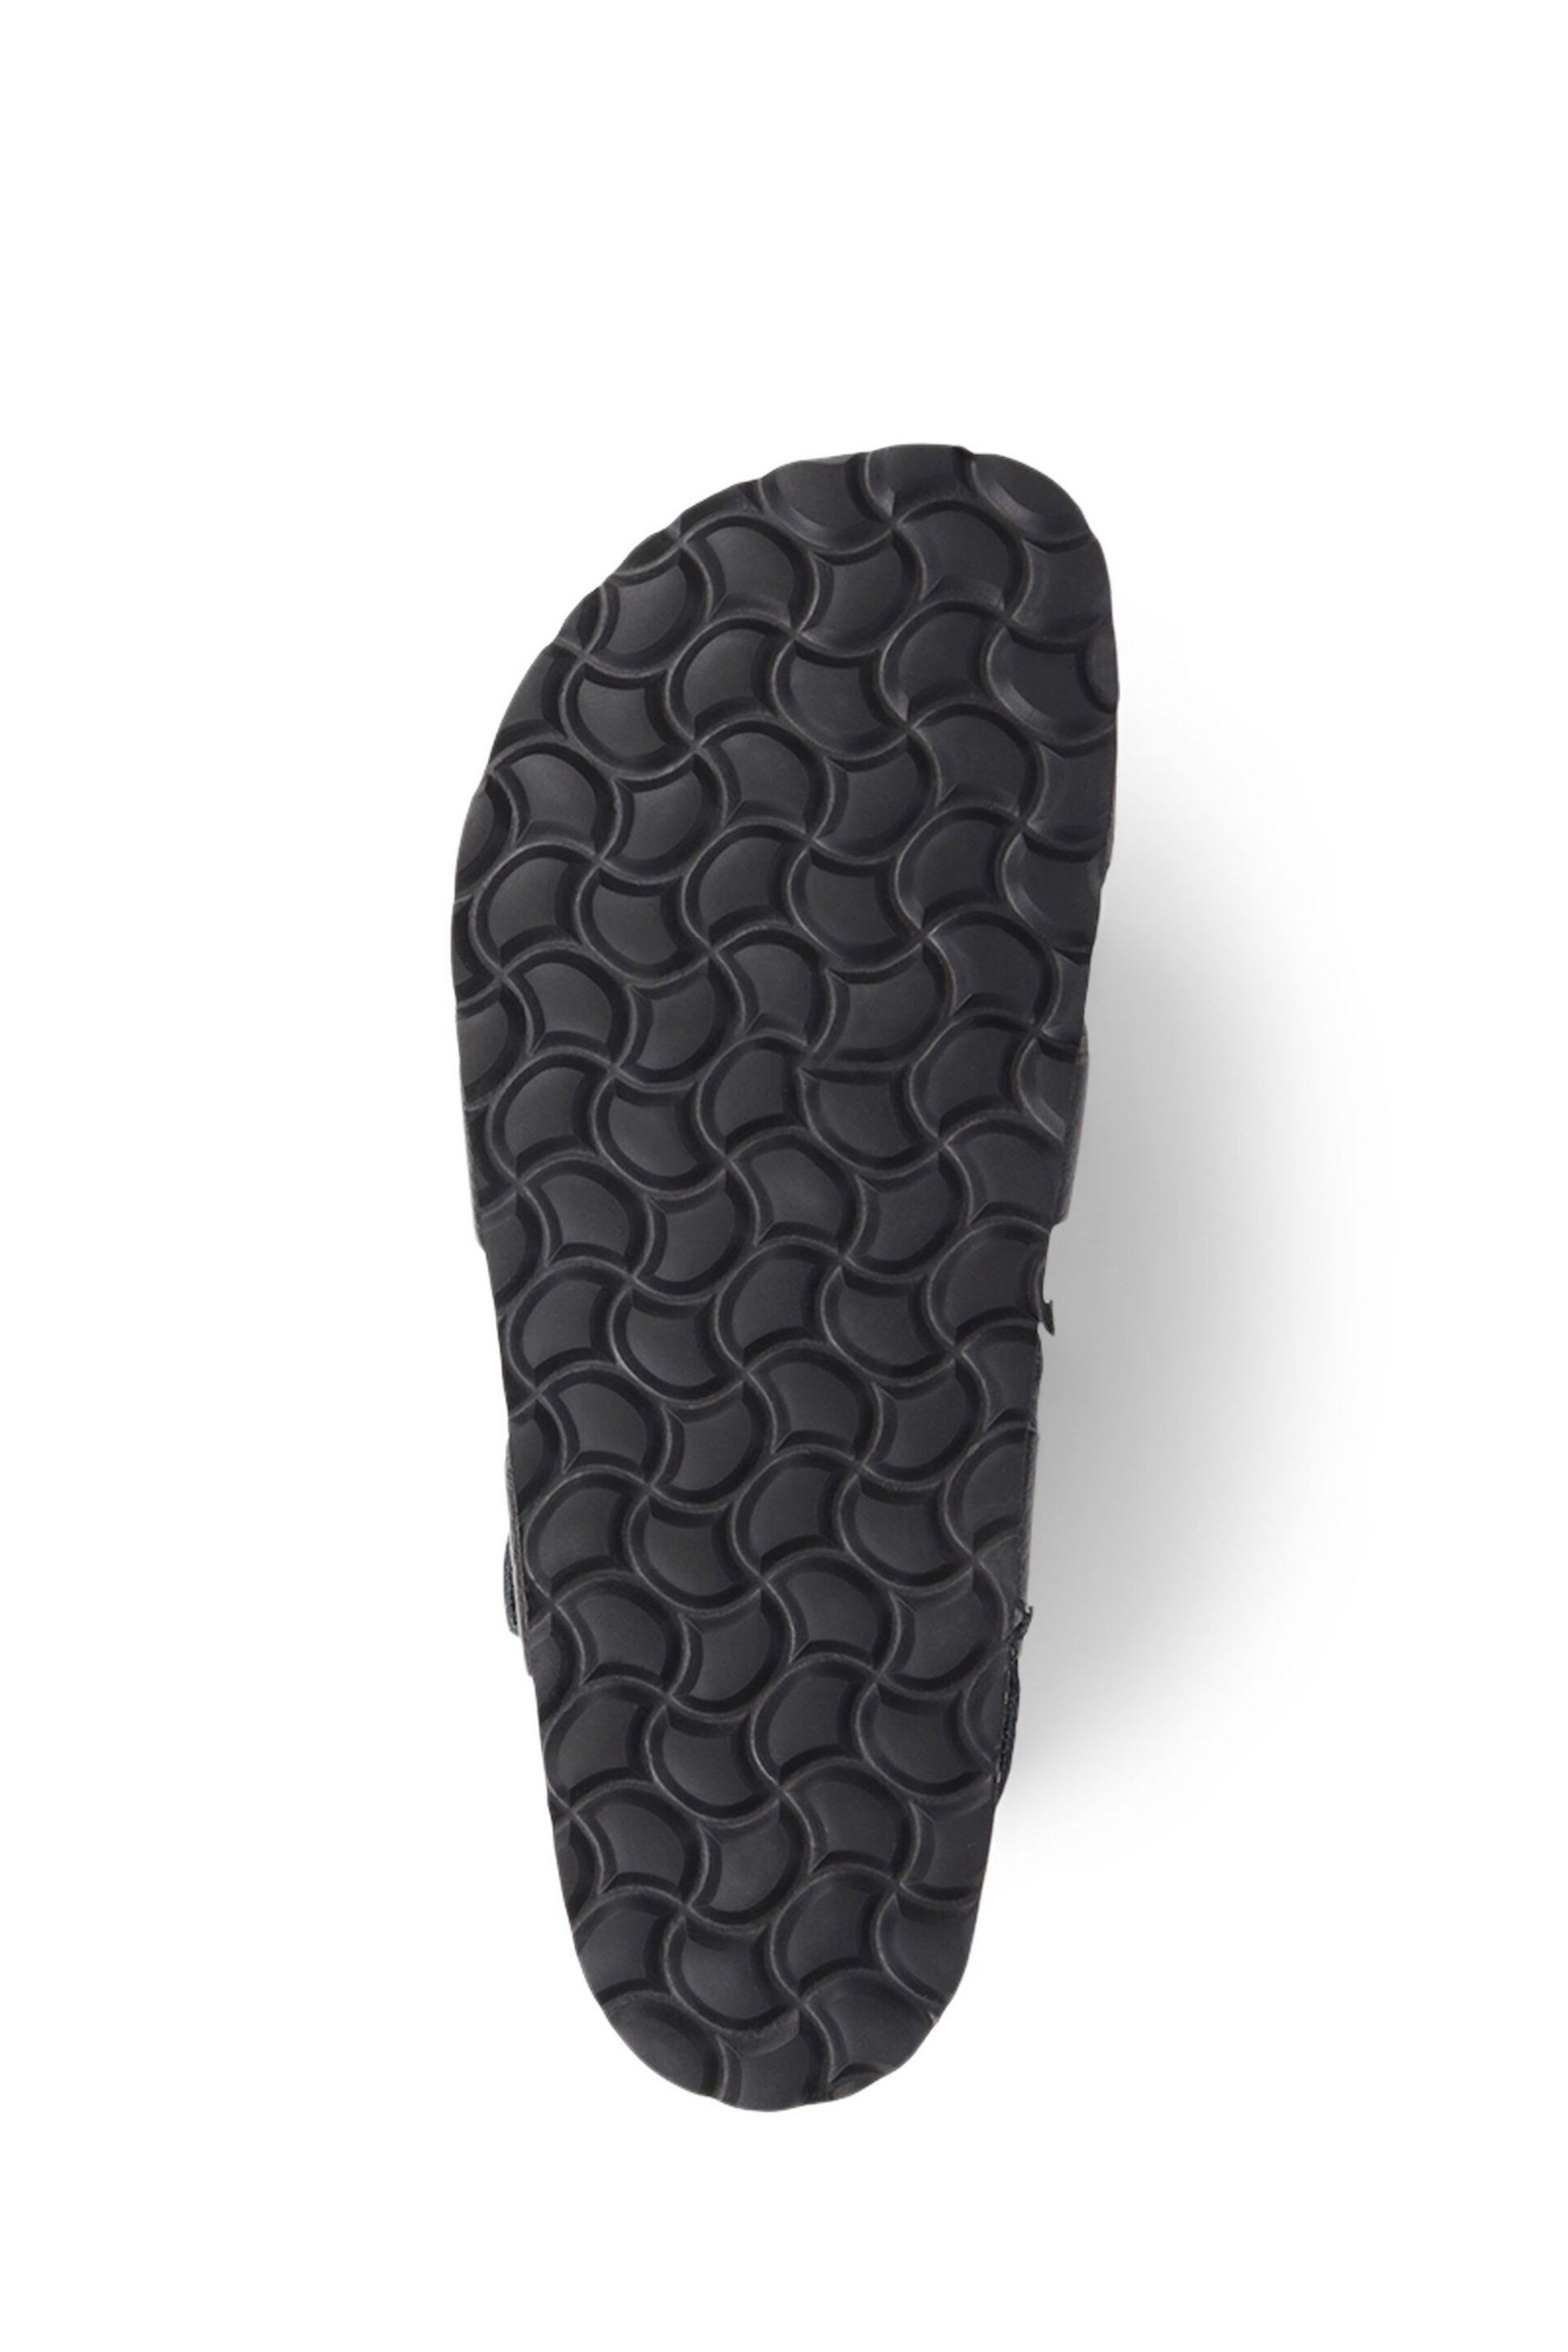 Jones Bootmaker Jean Leather Black Sandals - Image 5 of 5